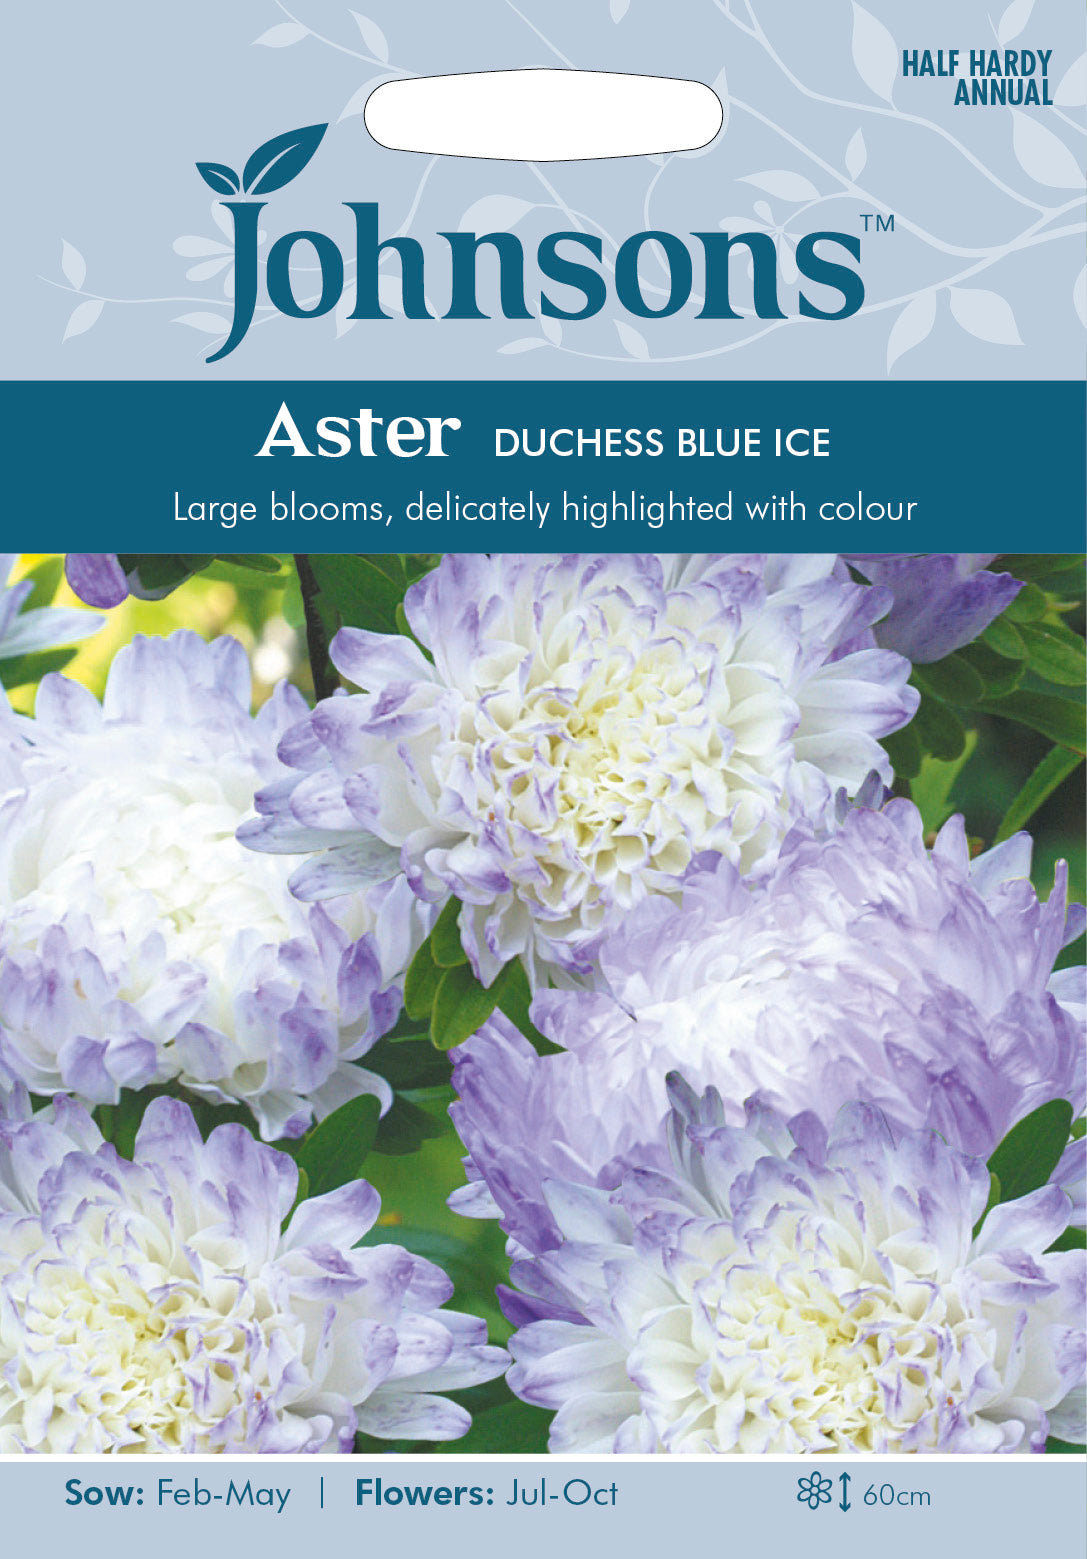 ASTER Duchess Blue Ice